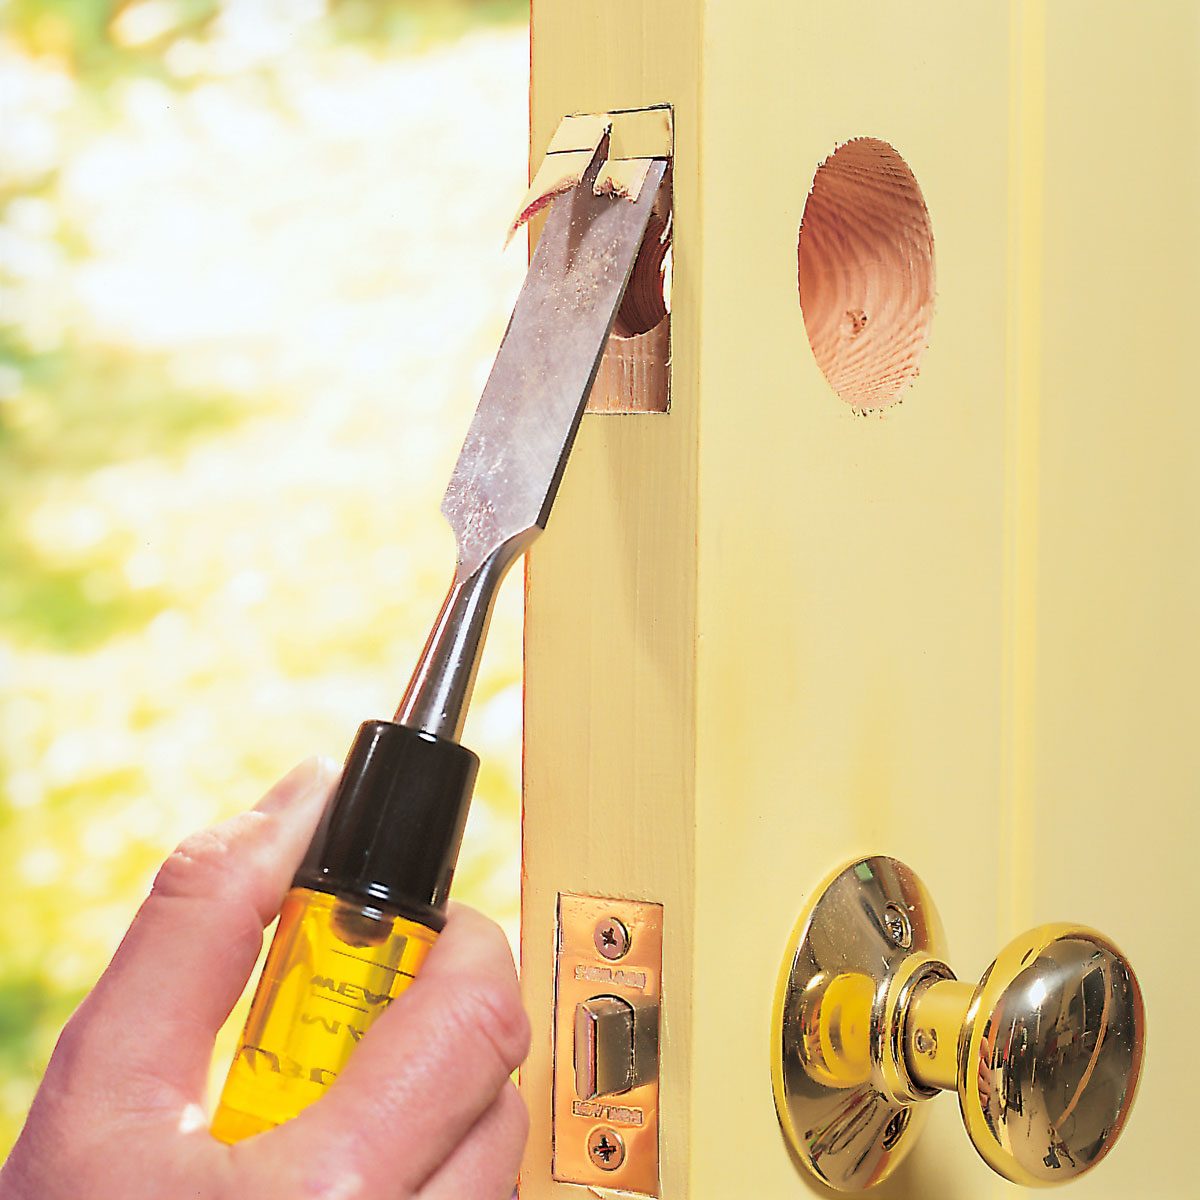 Chiseling out a wooden door for installing deadbolt lock, How To Install A Deadbolt Lock